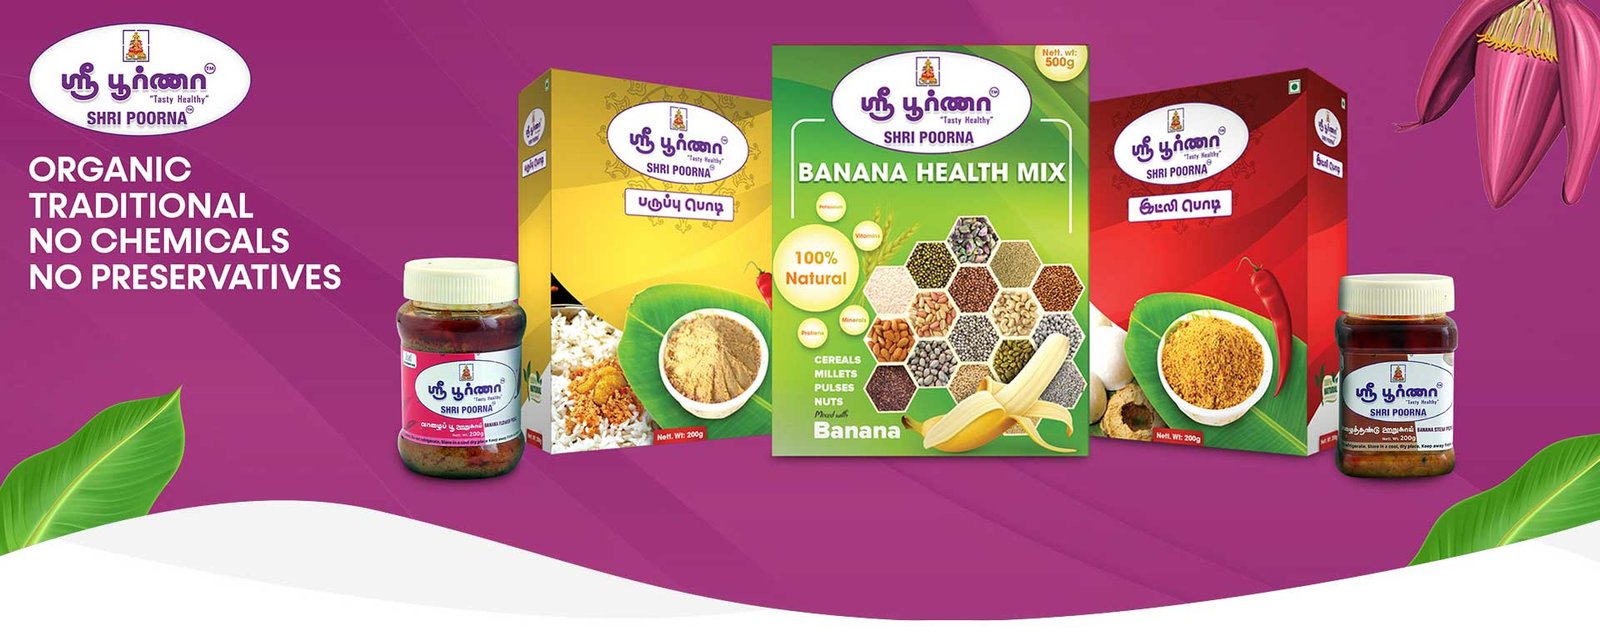  Organic Food Products Company in Tamilnadu